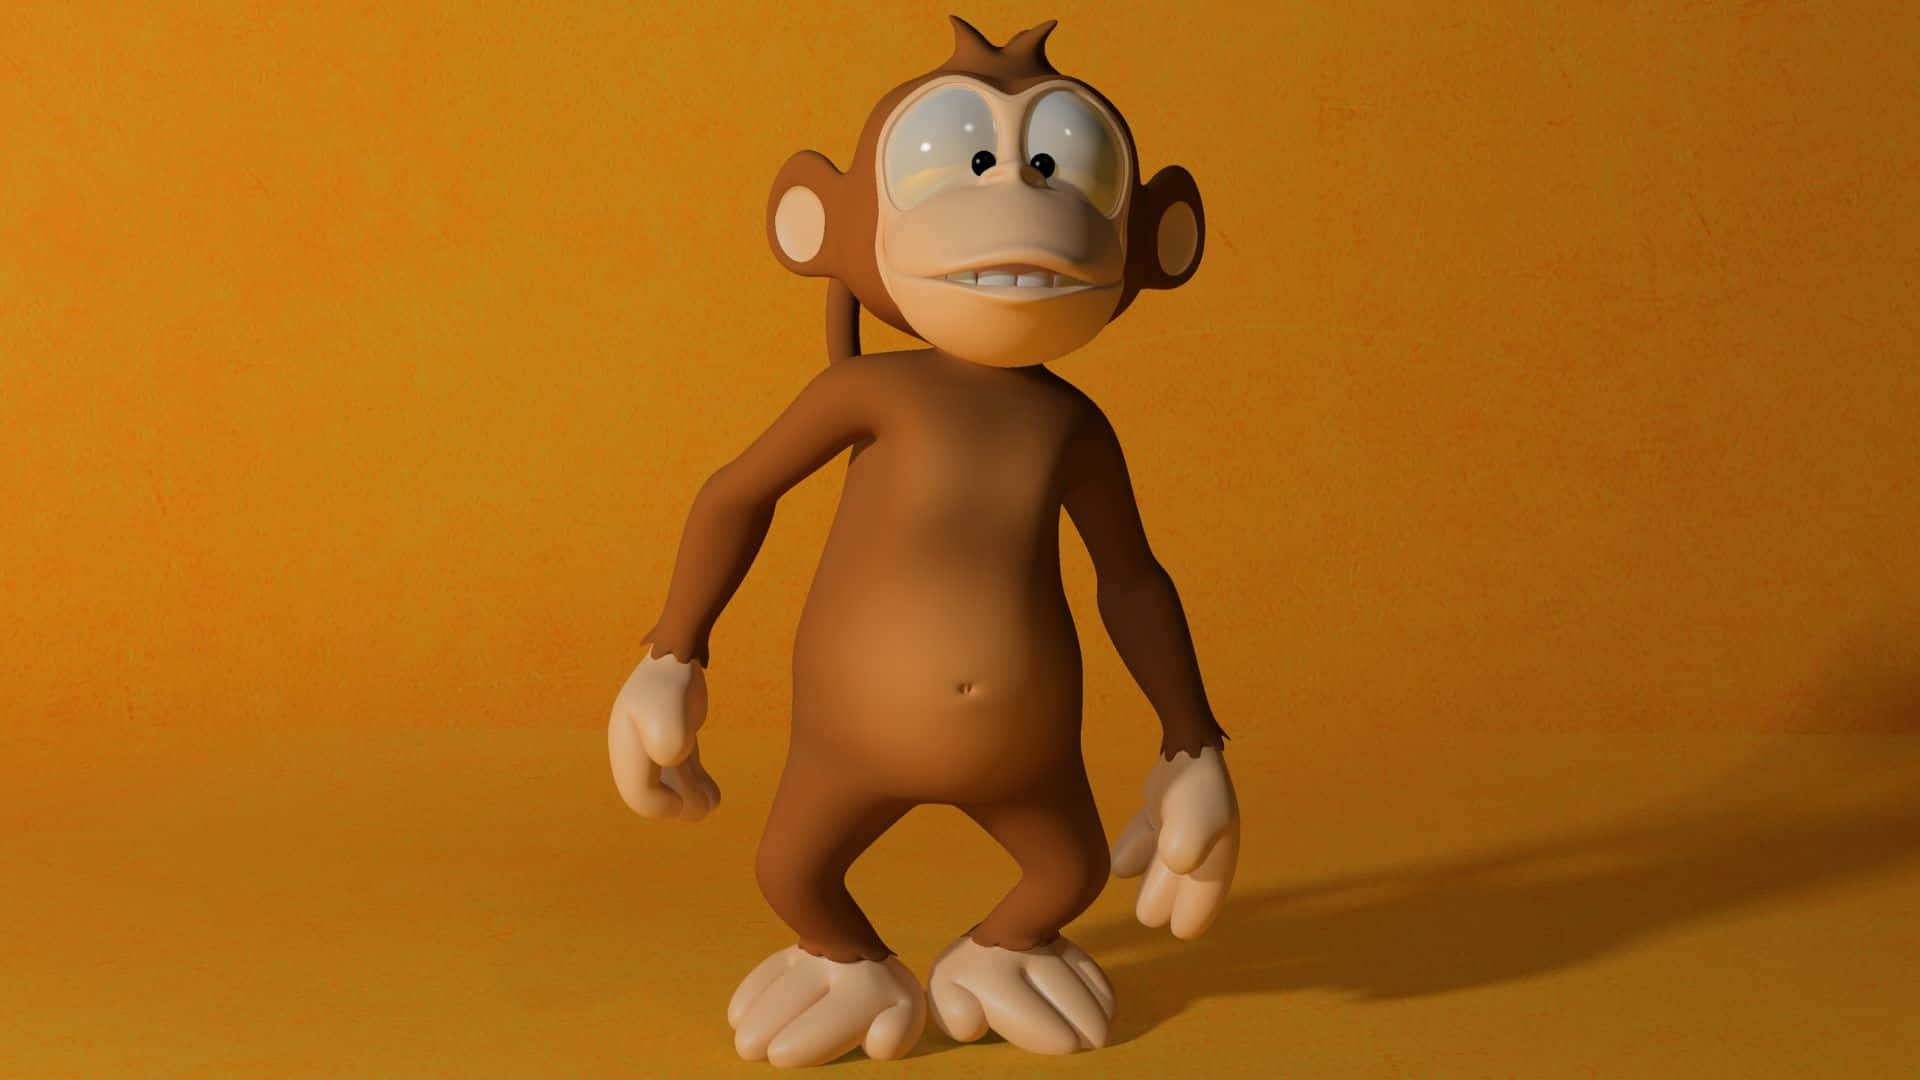 Fun-loving Cartoon Monkey